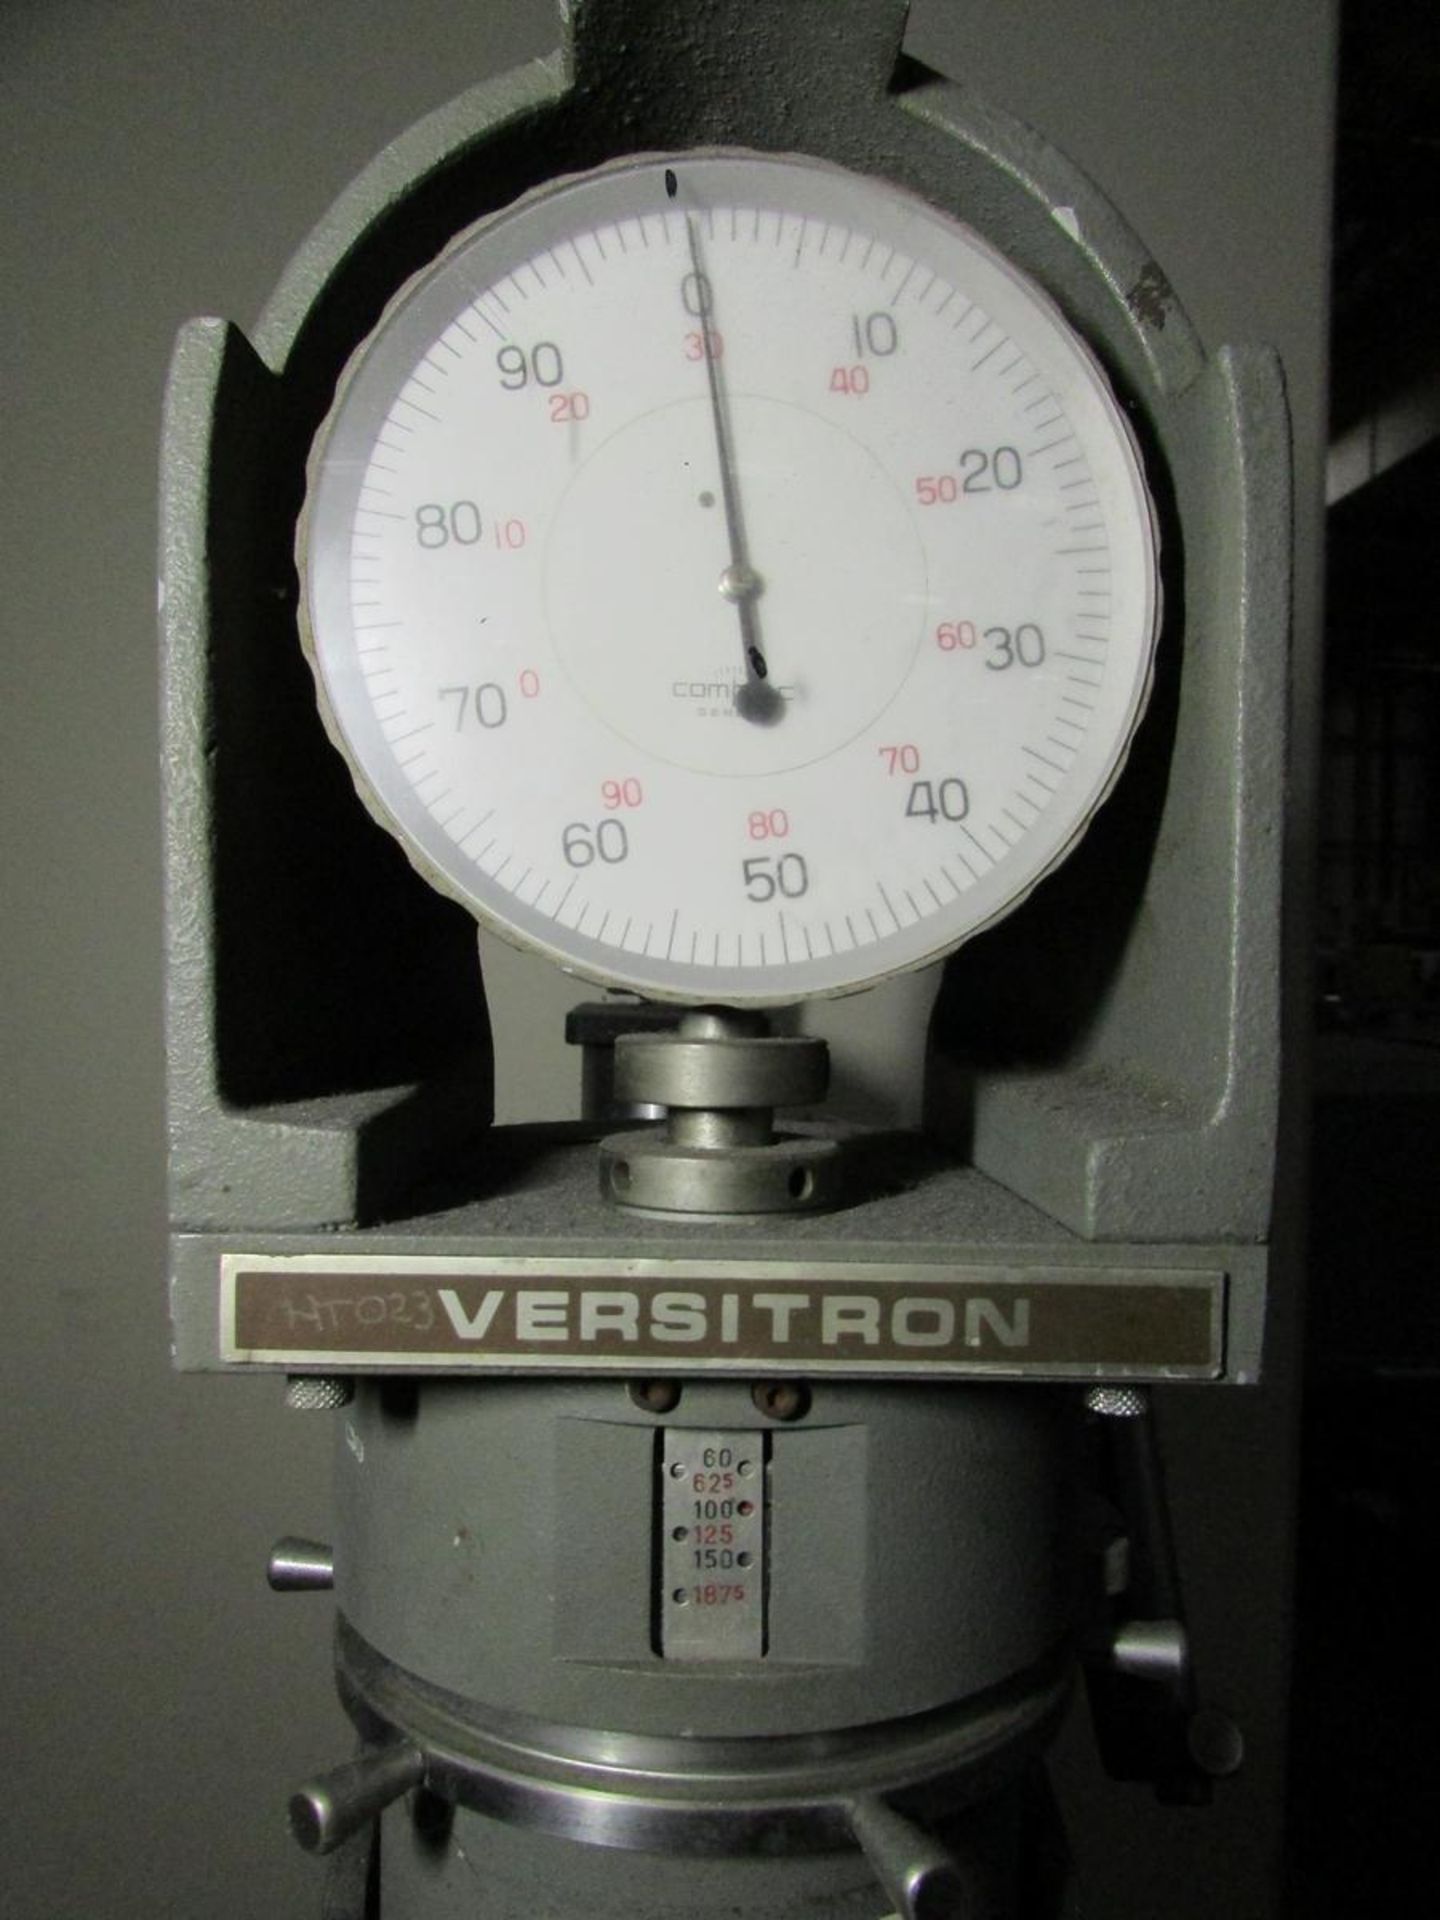 NewAge Industries Versitron Benchtop Rockwell Hardness Tester - Image 3 of 10